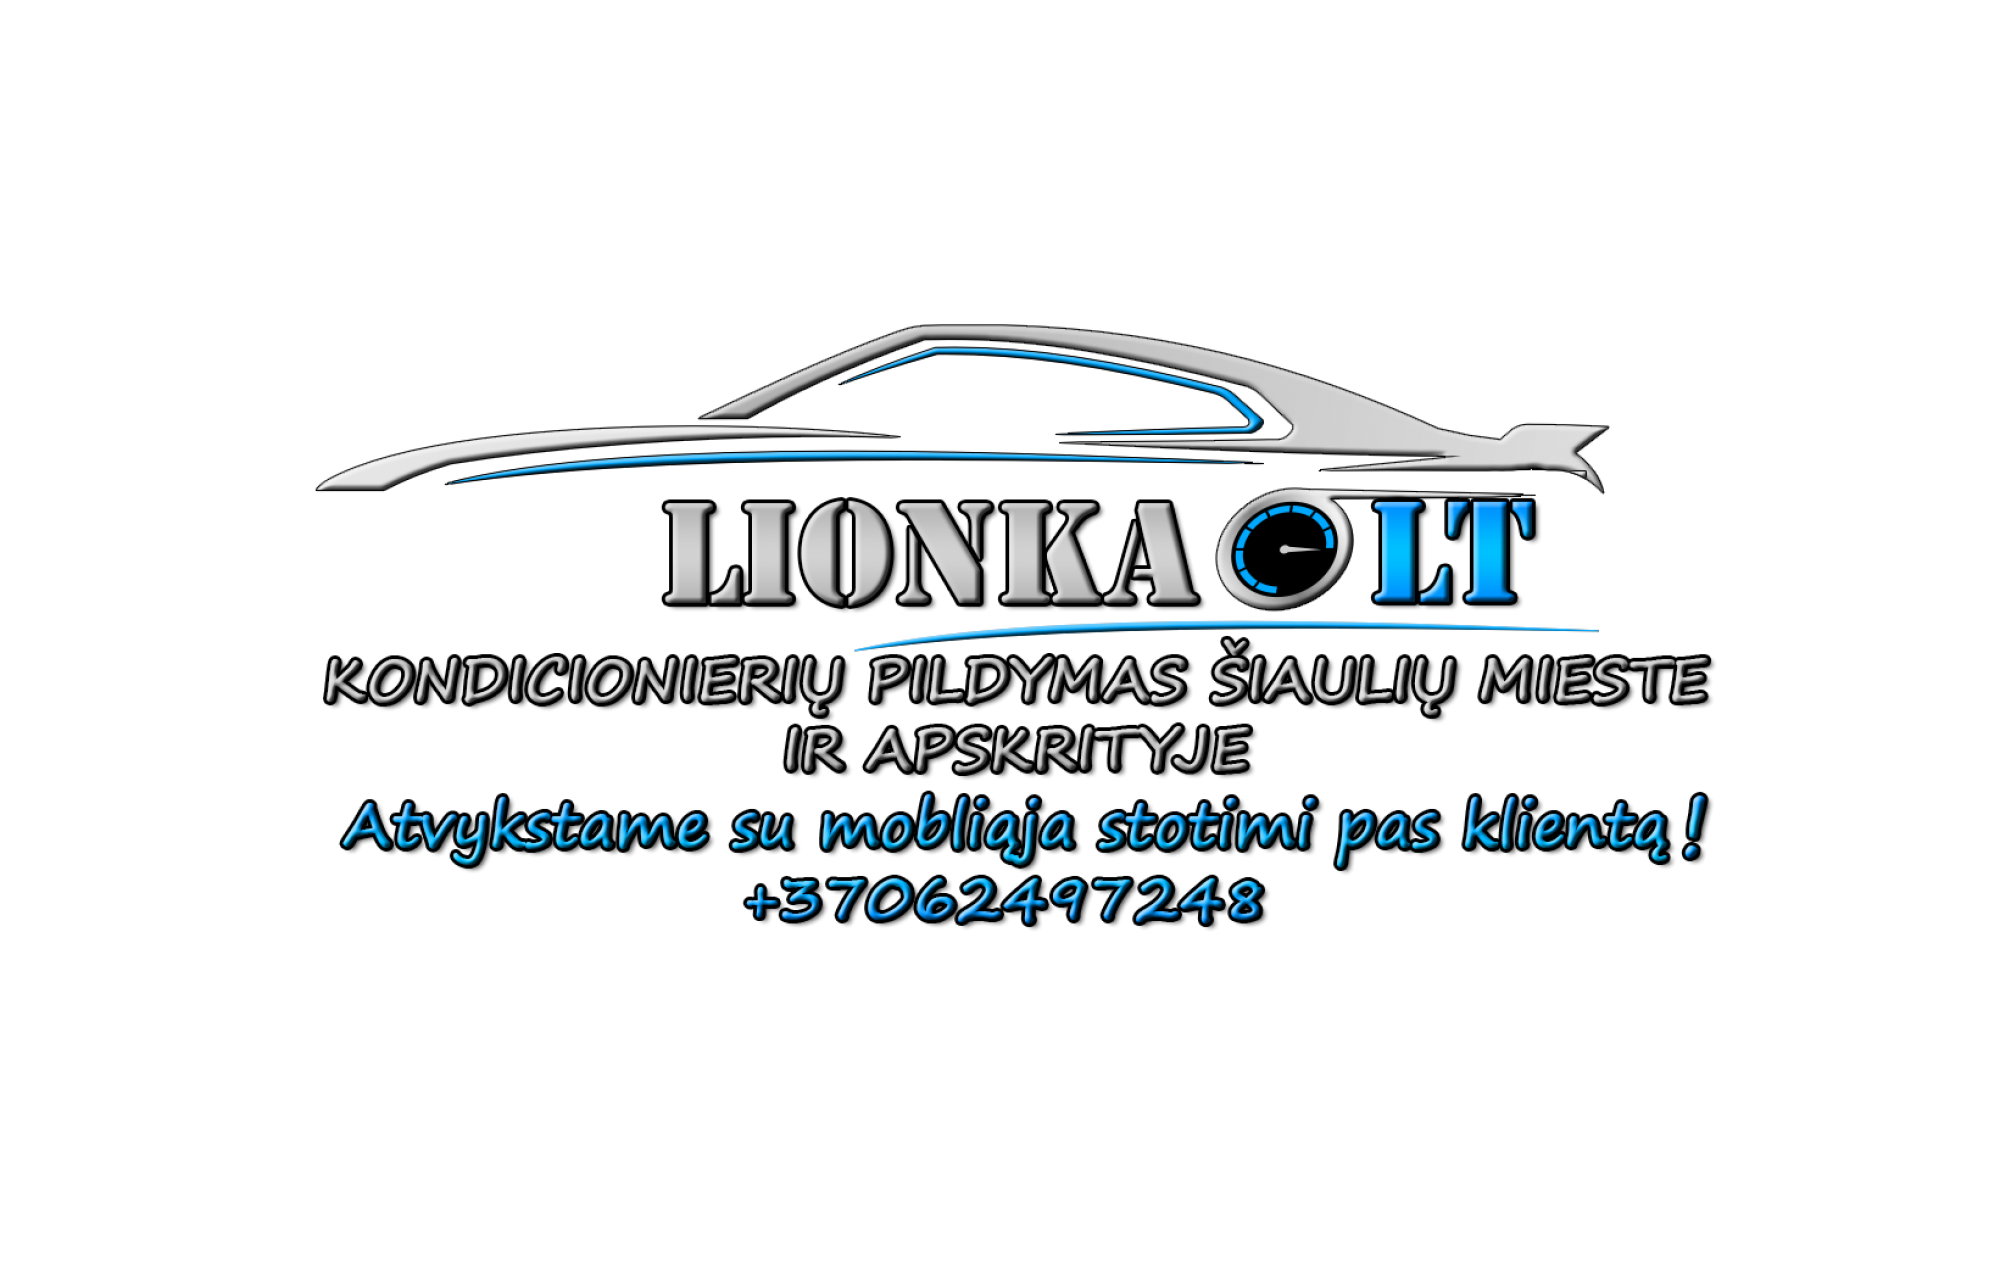 Lionka